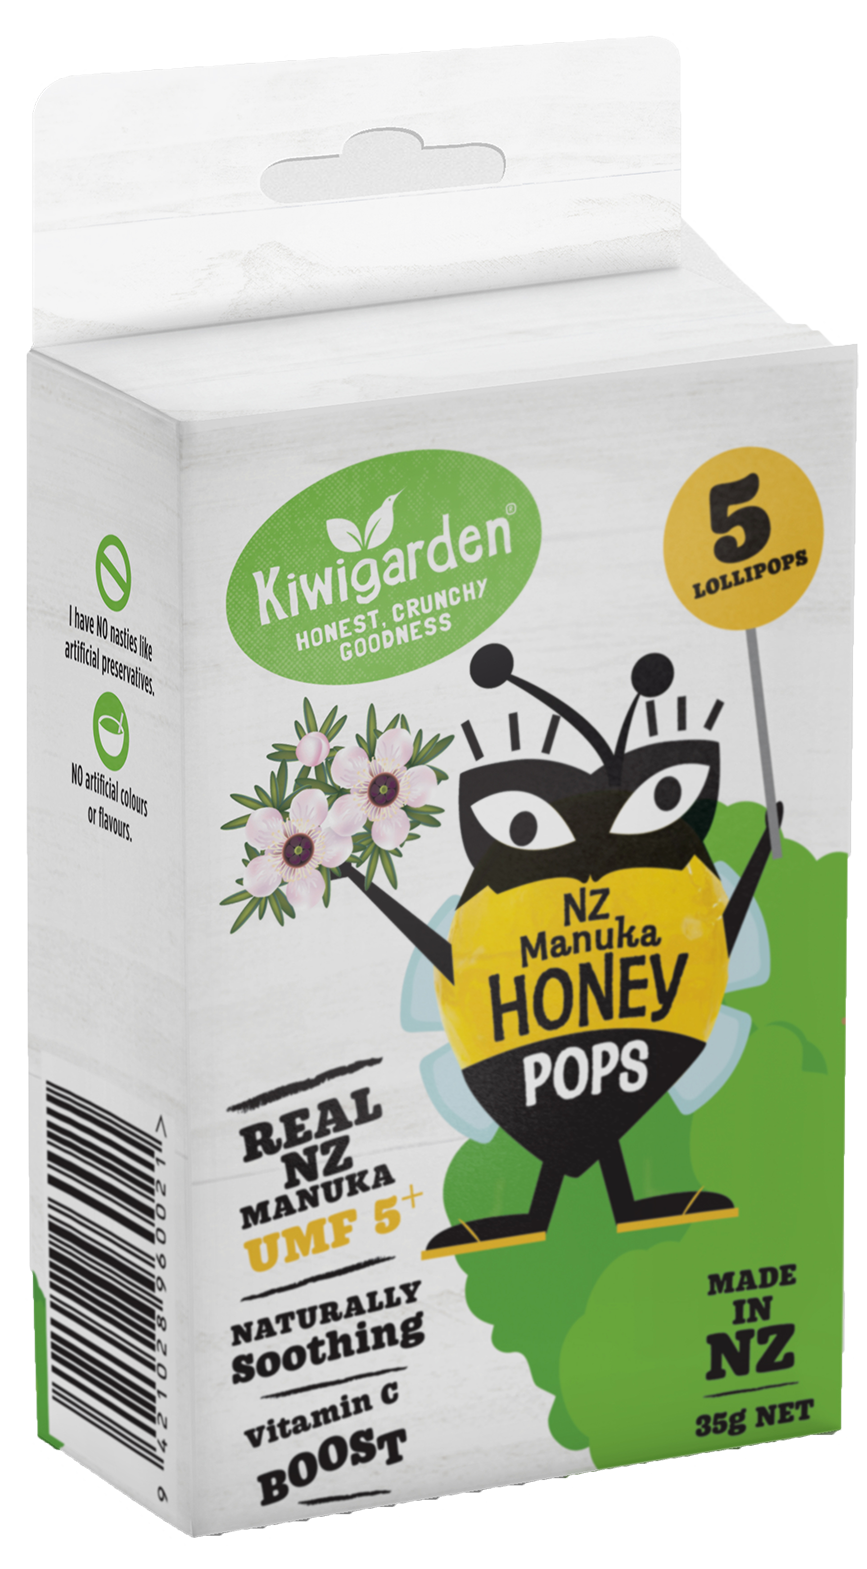 NEW Kiwigarden Manuka Honey pop 5x7g